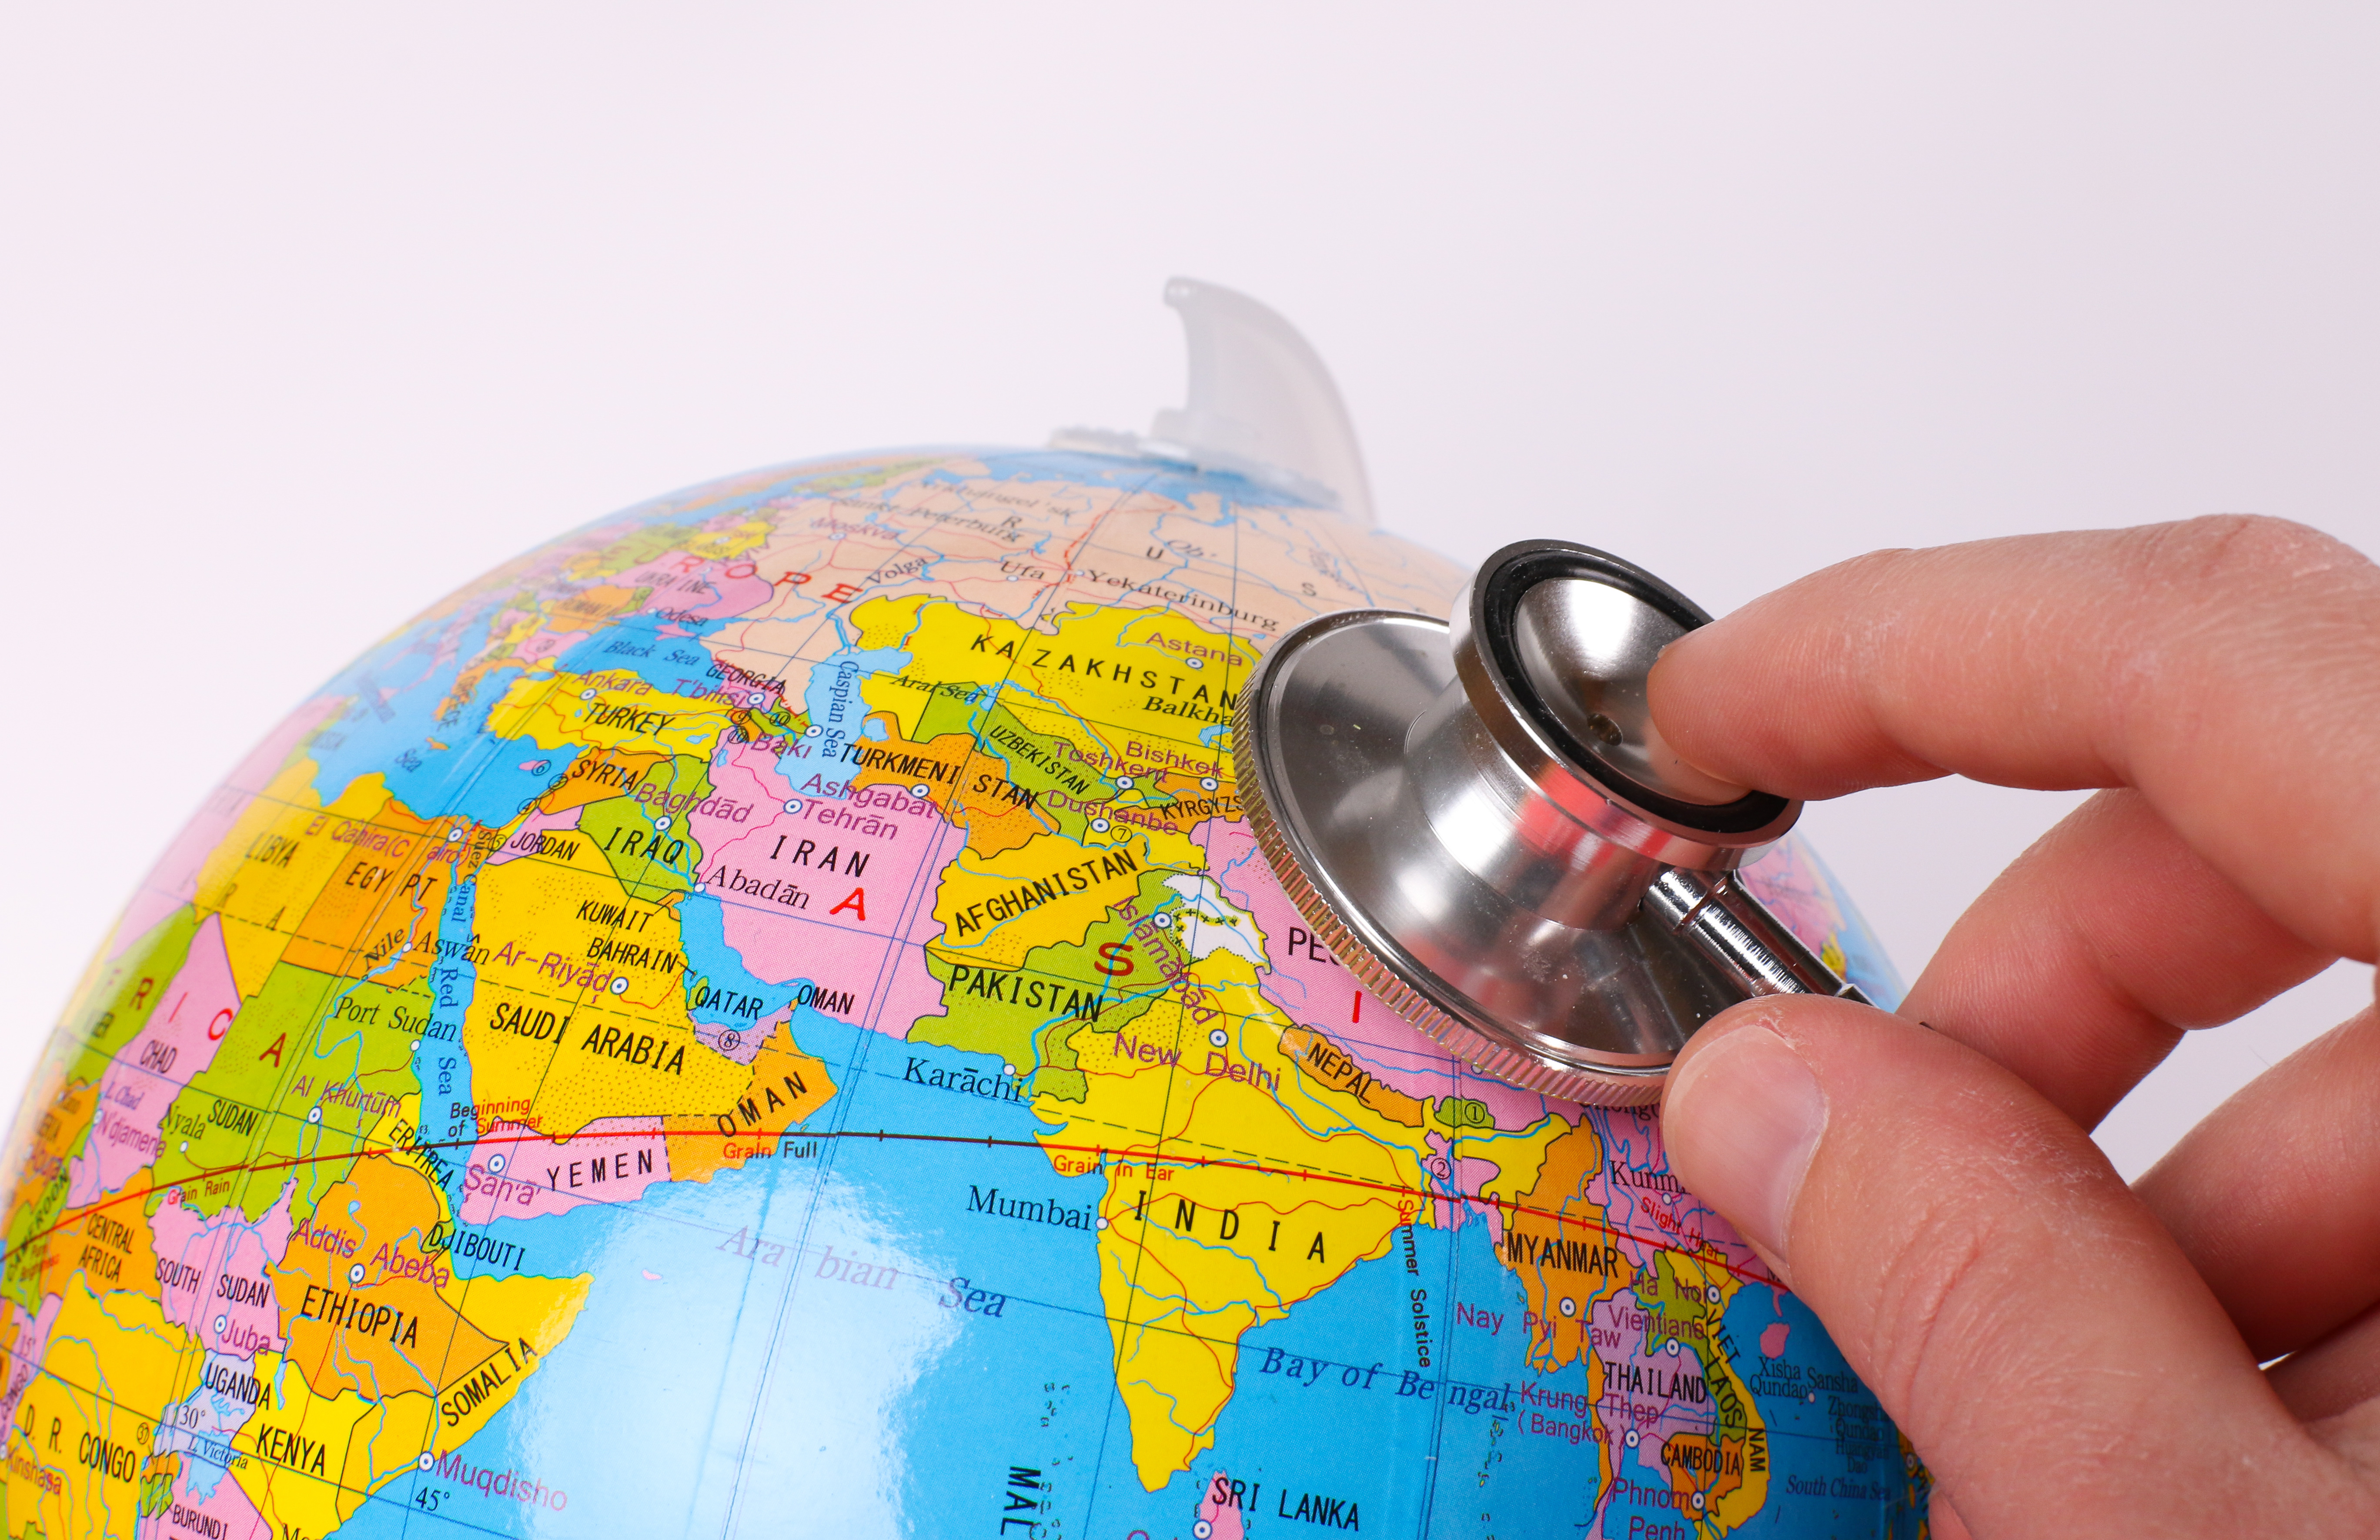 Hand holding stethoscope on colorful globe